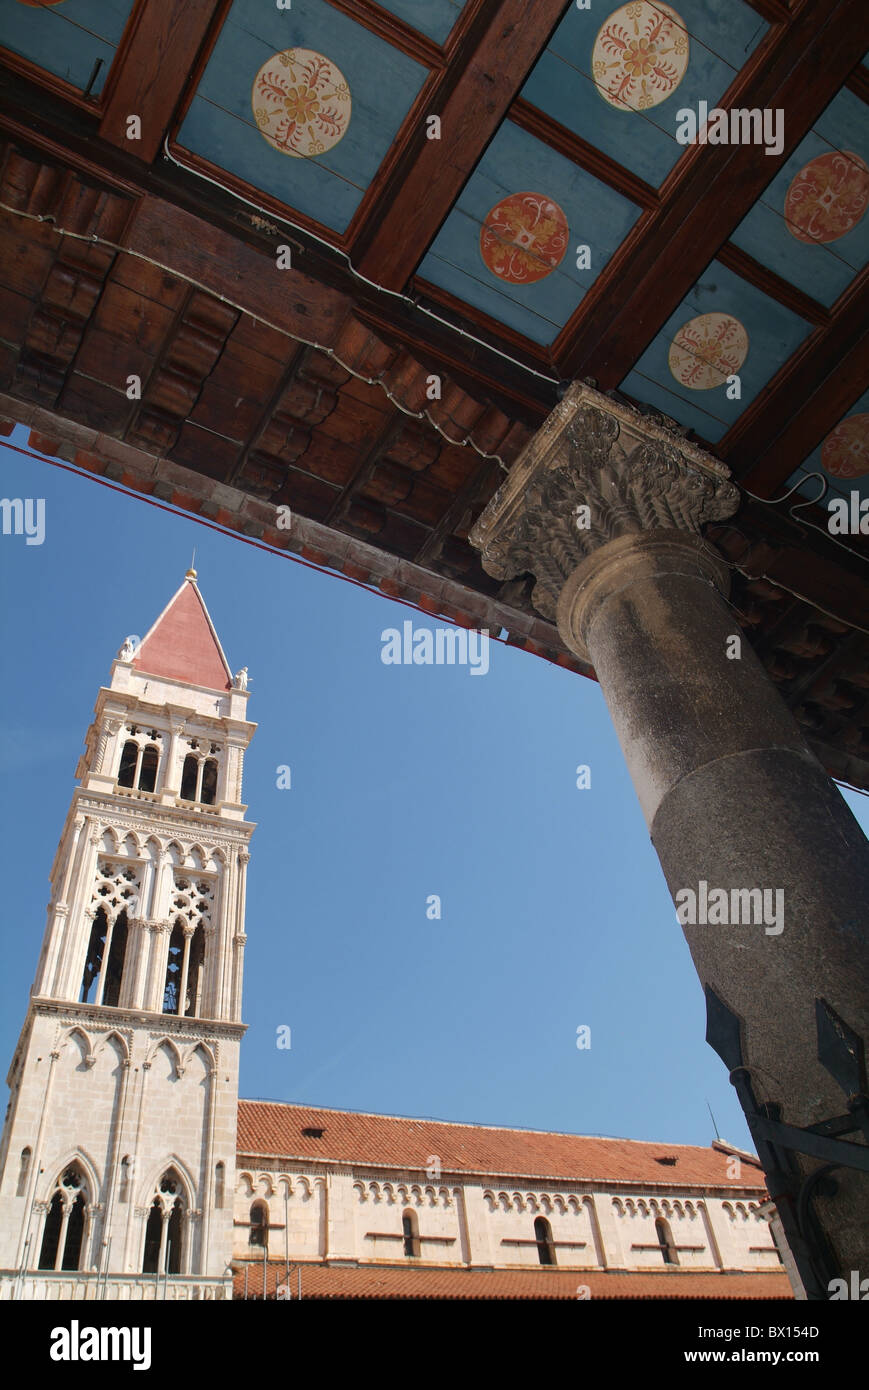 Trogir-Stadt St. Laurentius Kathedrale Spalte Abdeckung Farben Altstadt Kroatien Europa dalmatinischen UNESCO w Stockfoto